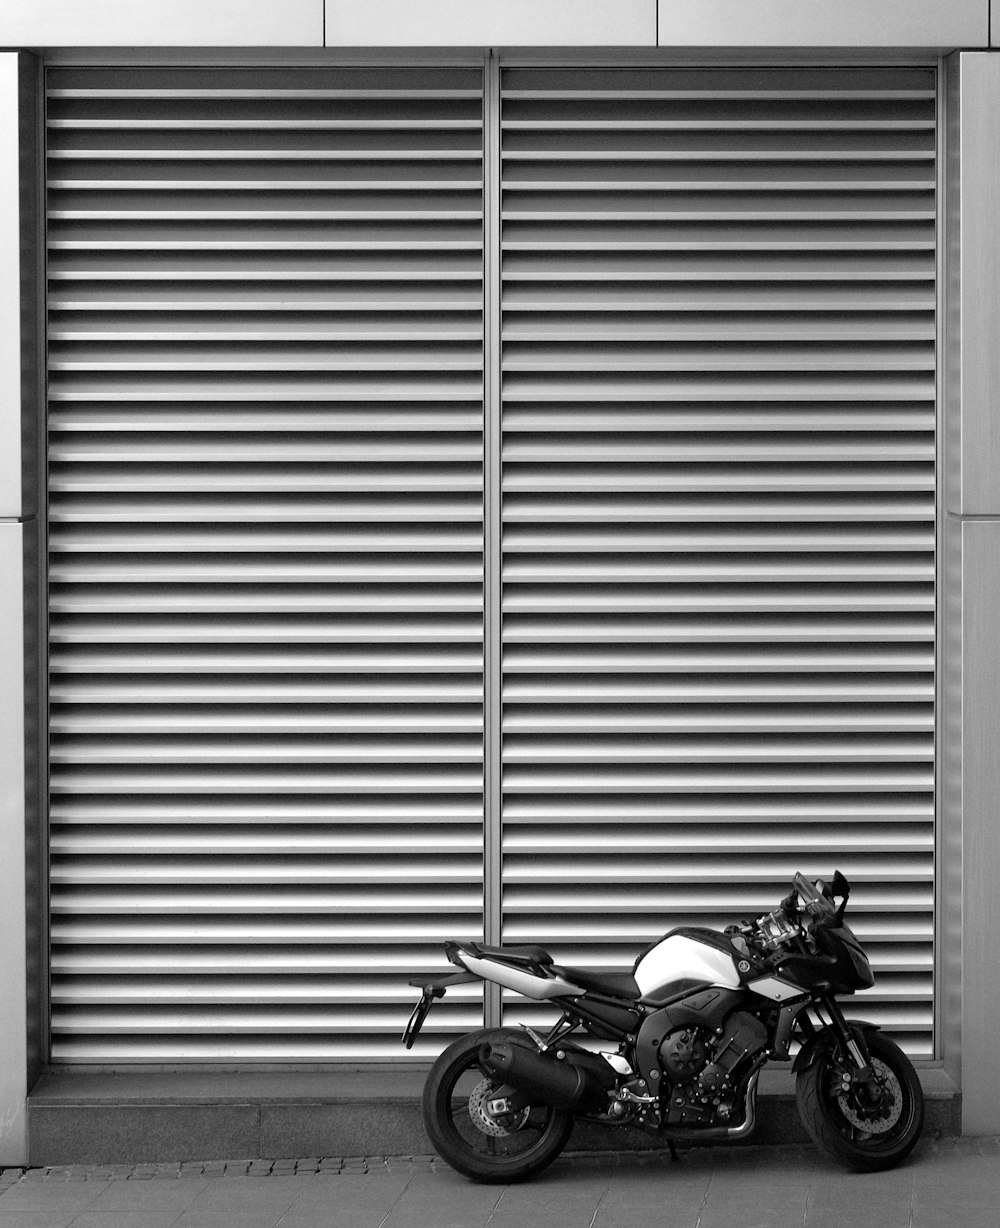 backbone motorcycle parked beside roll-up door